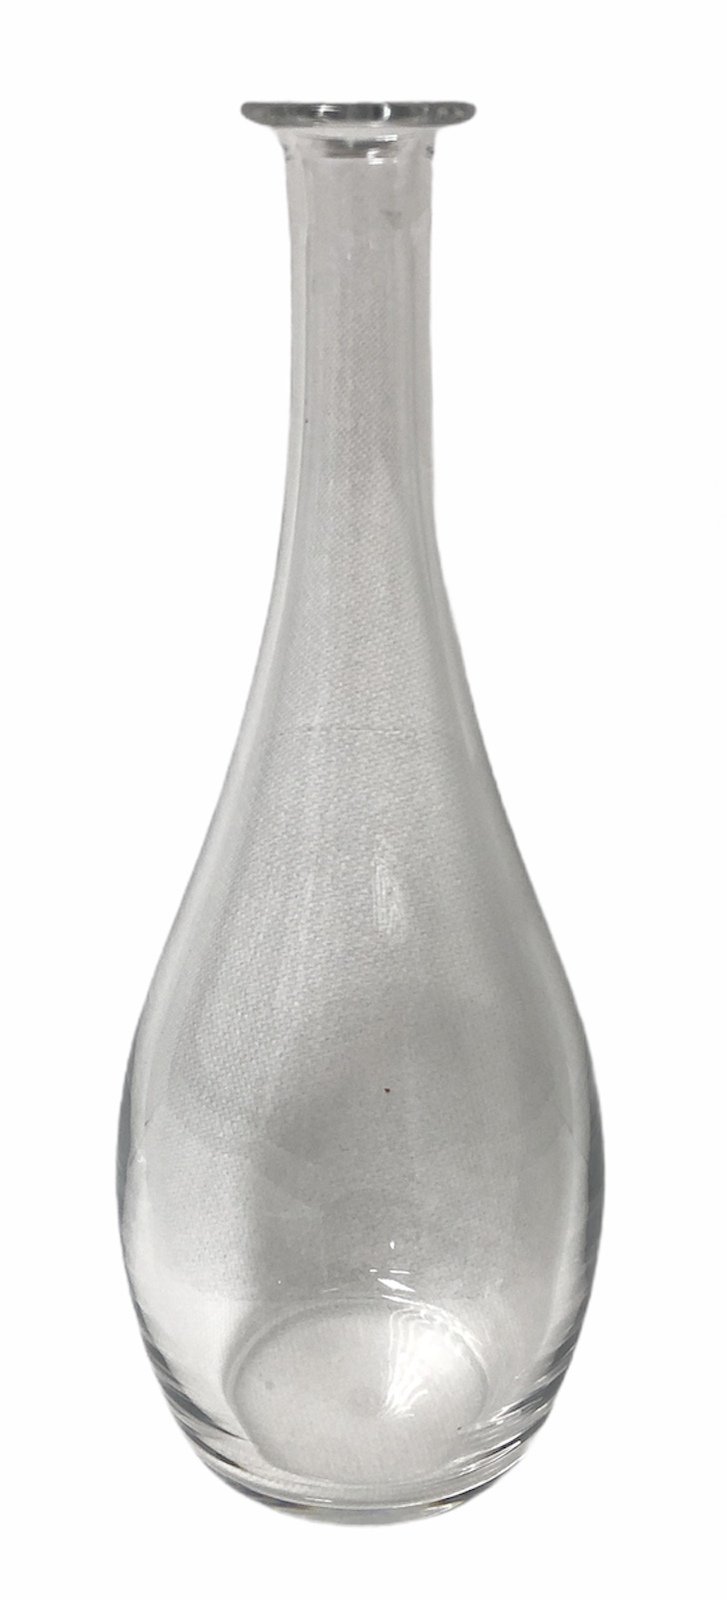 Primary image for Baccarat Crystal Single flower vase 297506